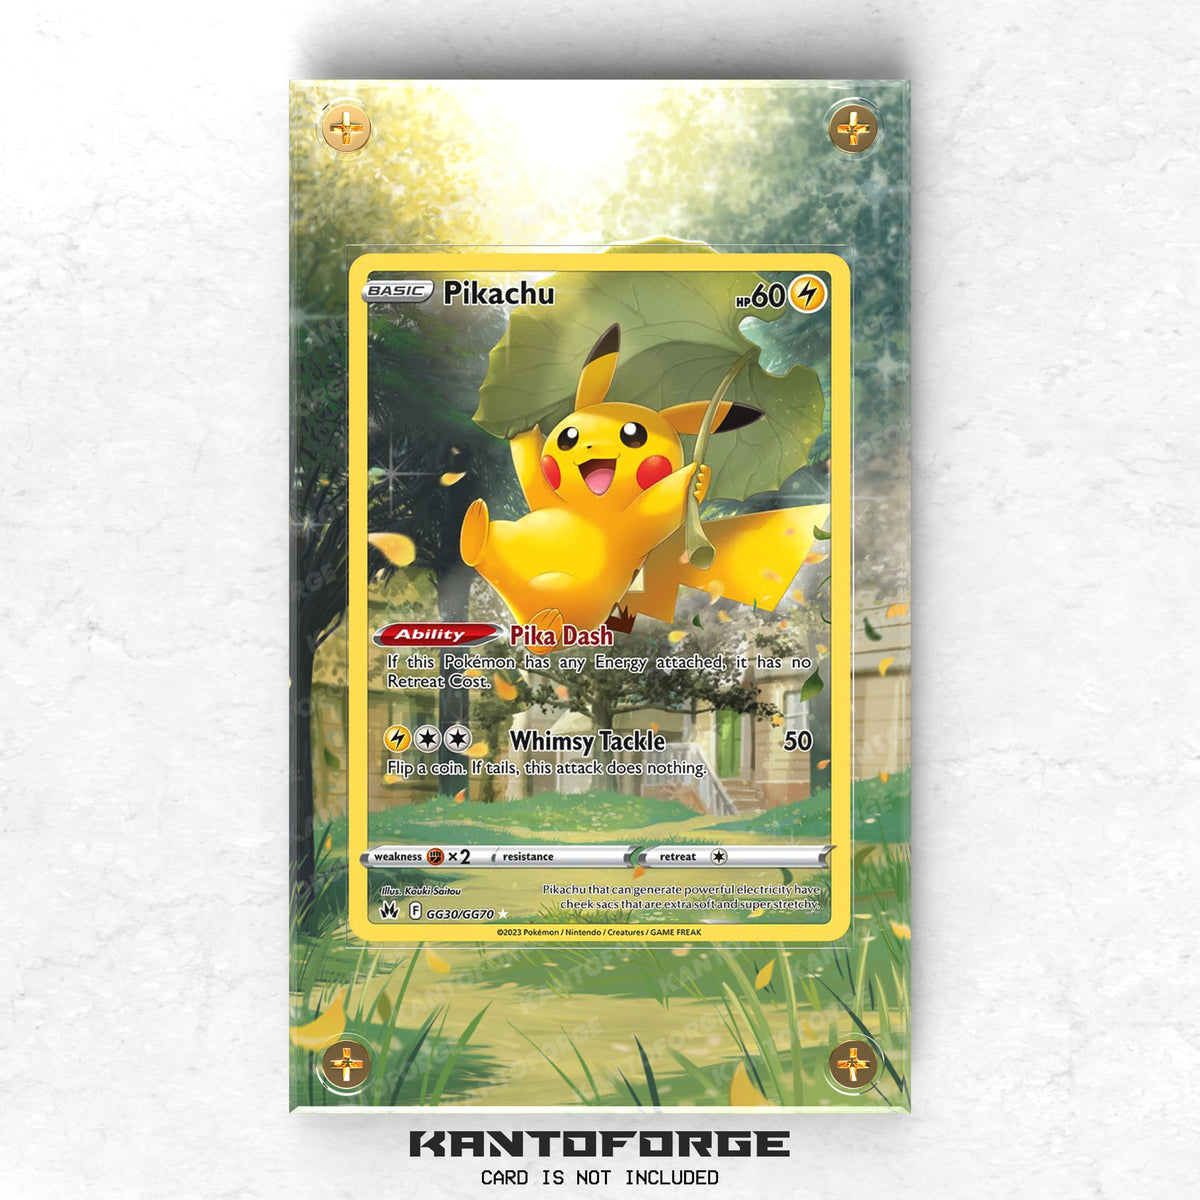 Pikachu GG30/GG70 - Pokémon Extended Artwork Protective Card Display Case